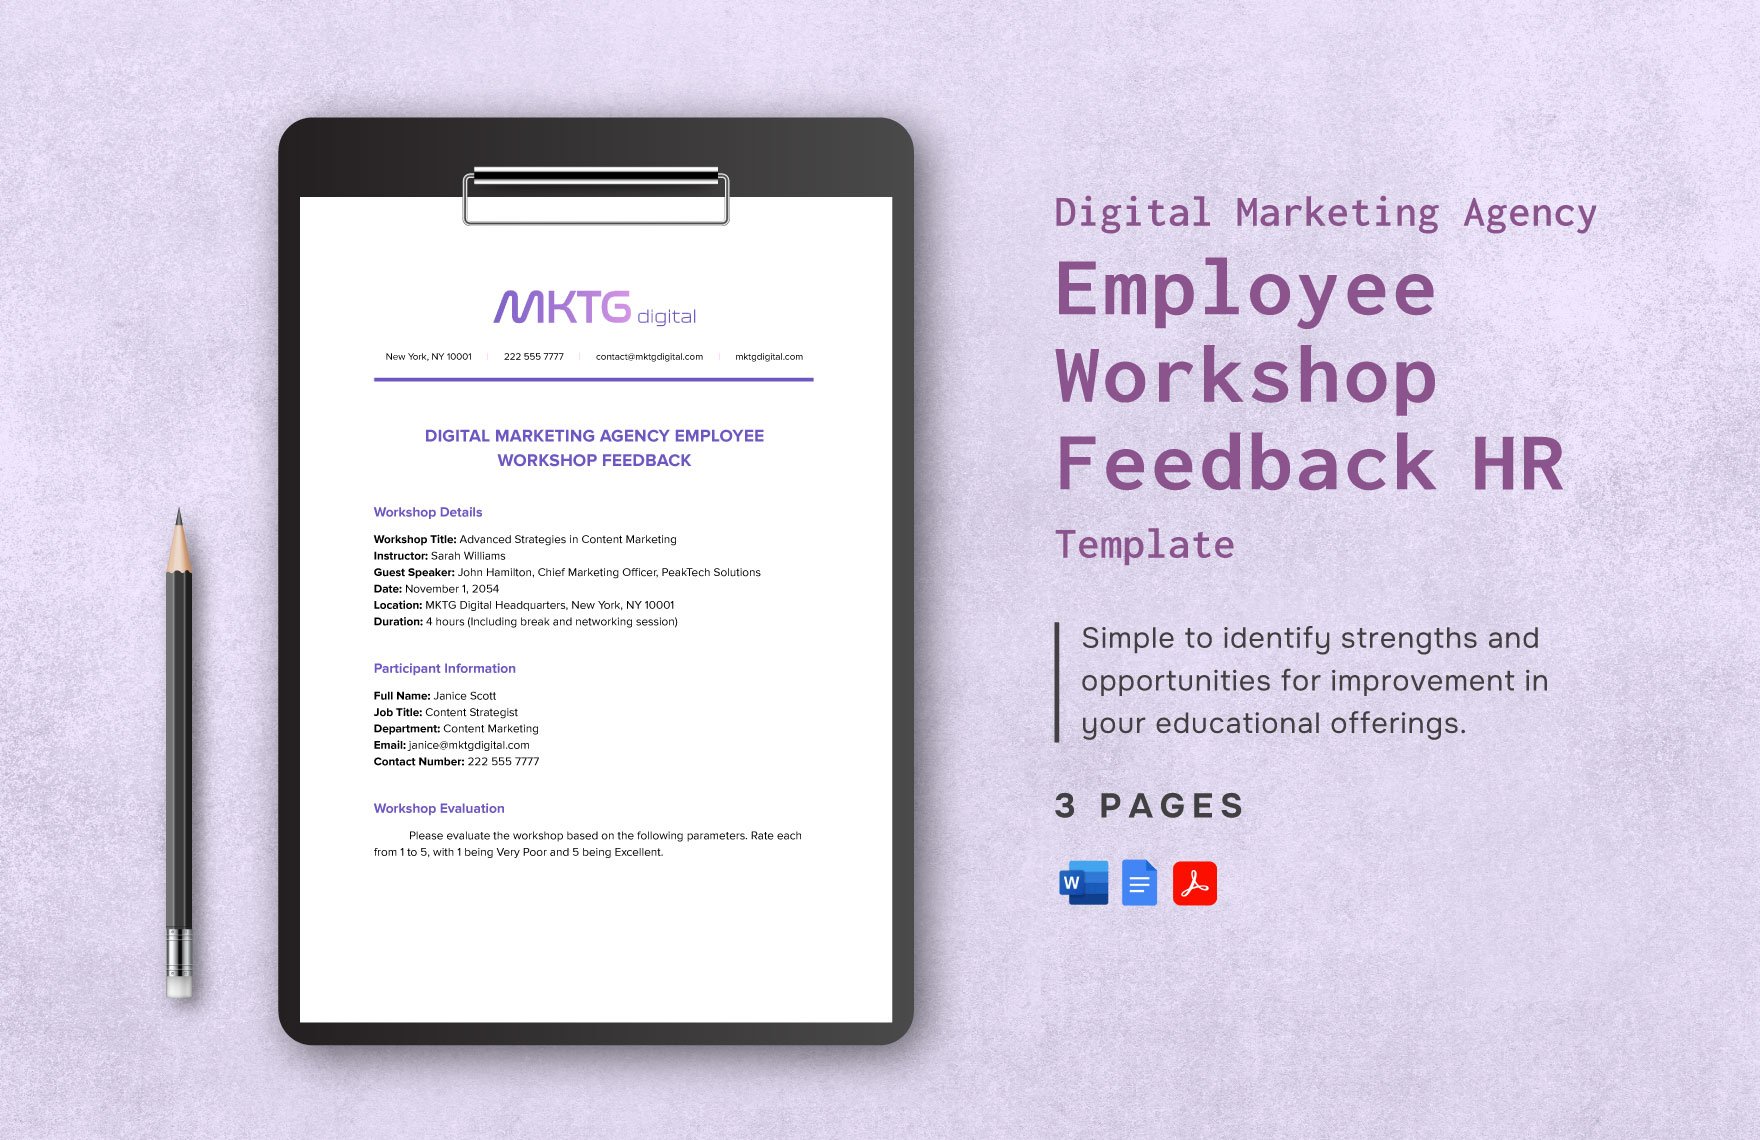 Digital Marketing Agency Employee Workshop Feedback HR Template